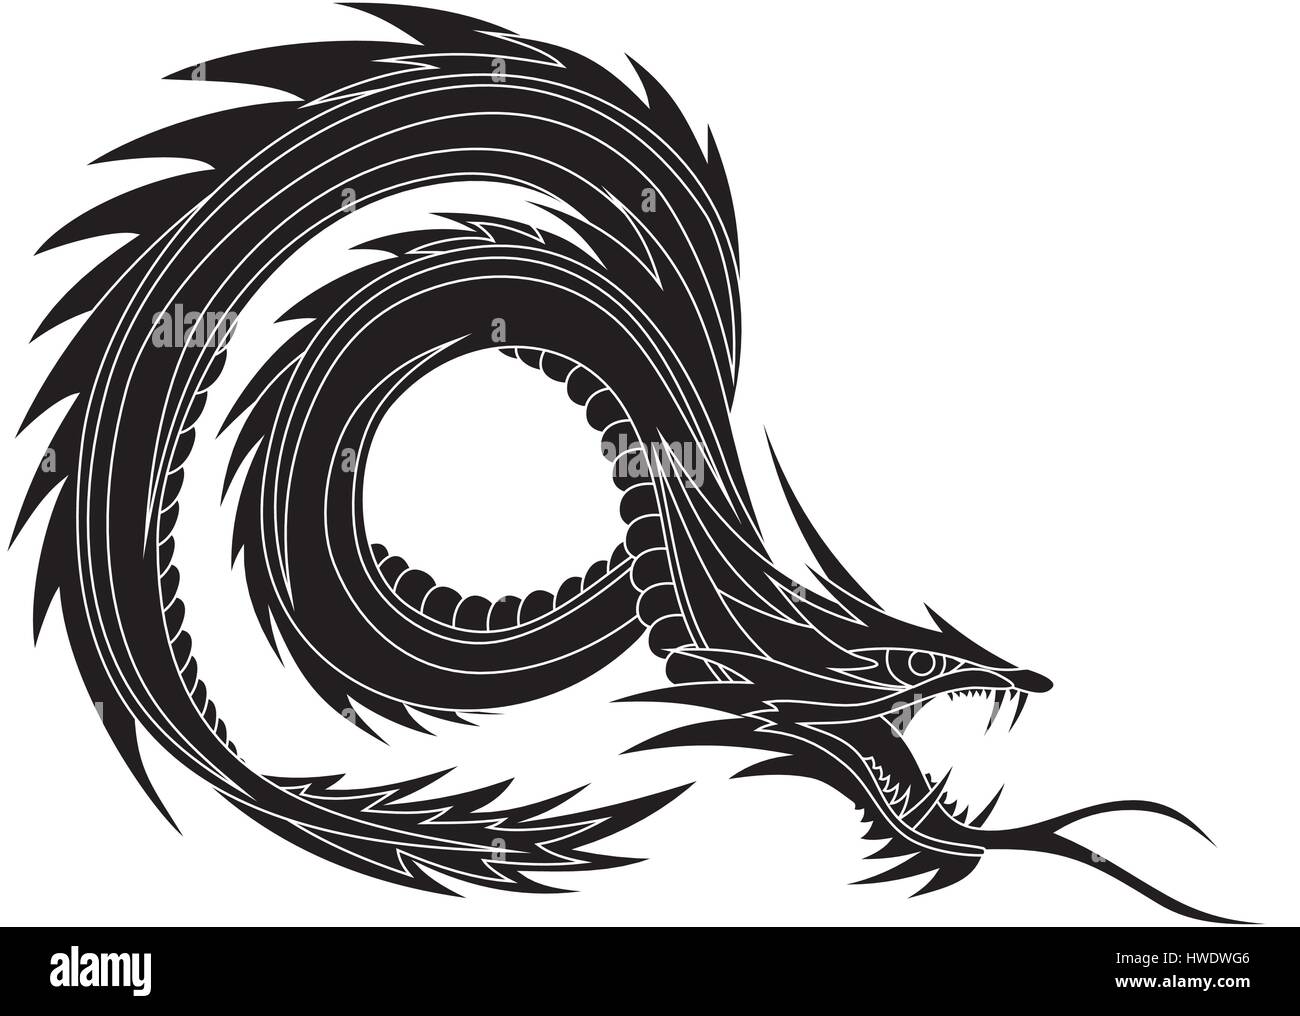 Abstract vector illustration of dragon Stock Vector